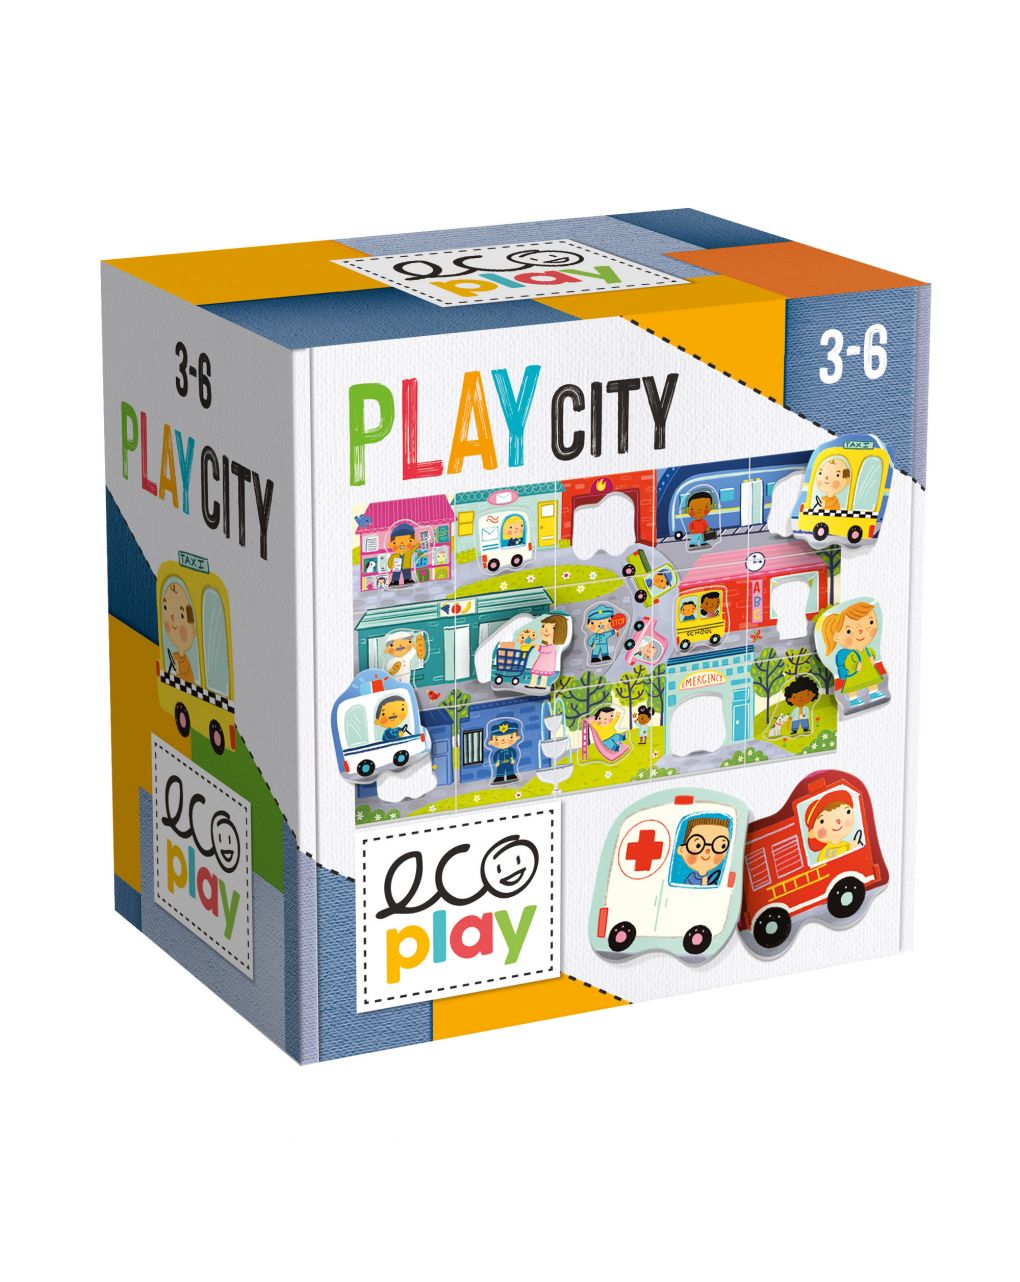 Ecoplay - play city - Headu